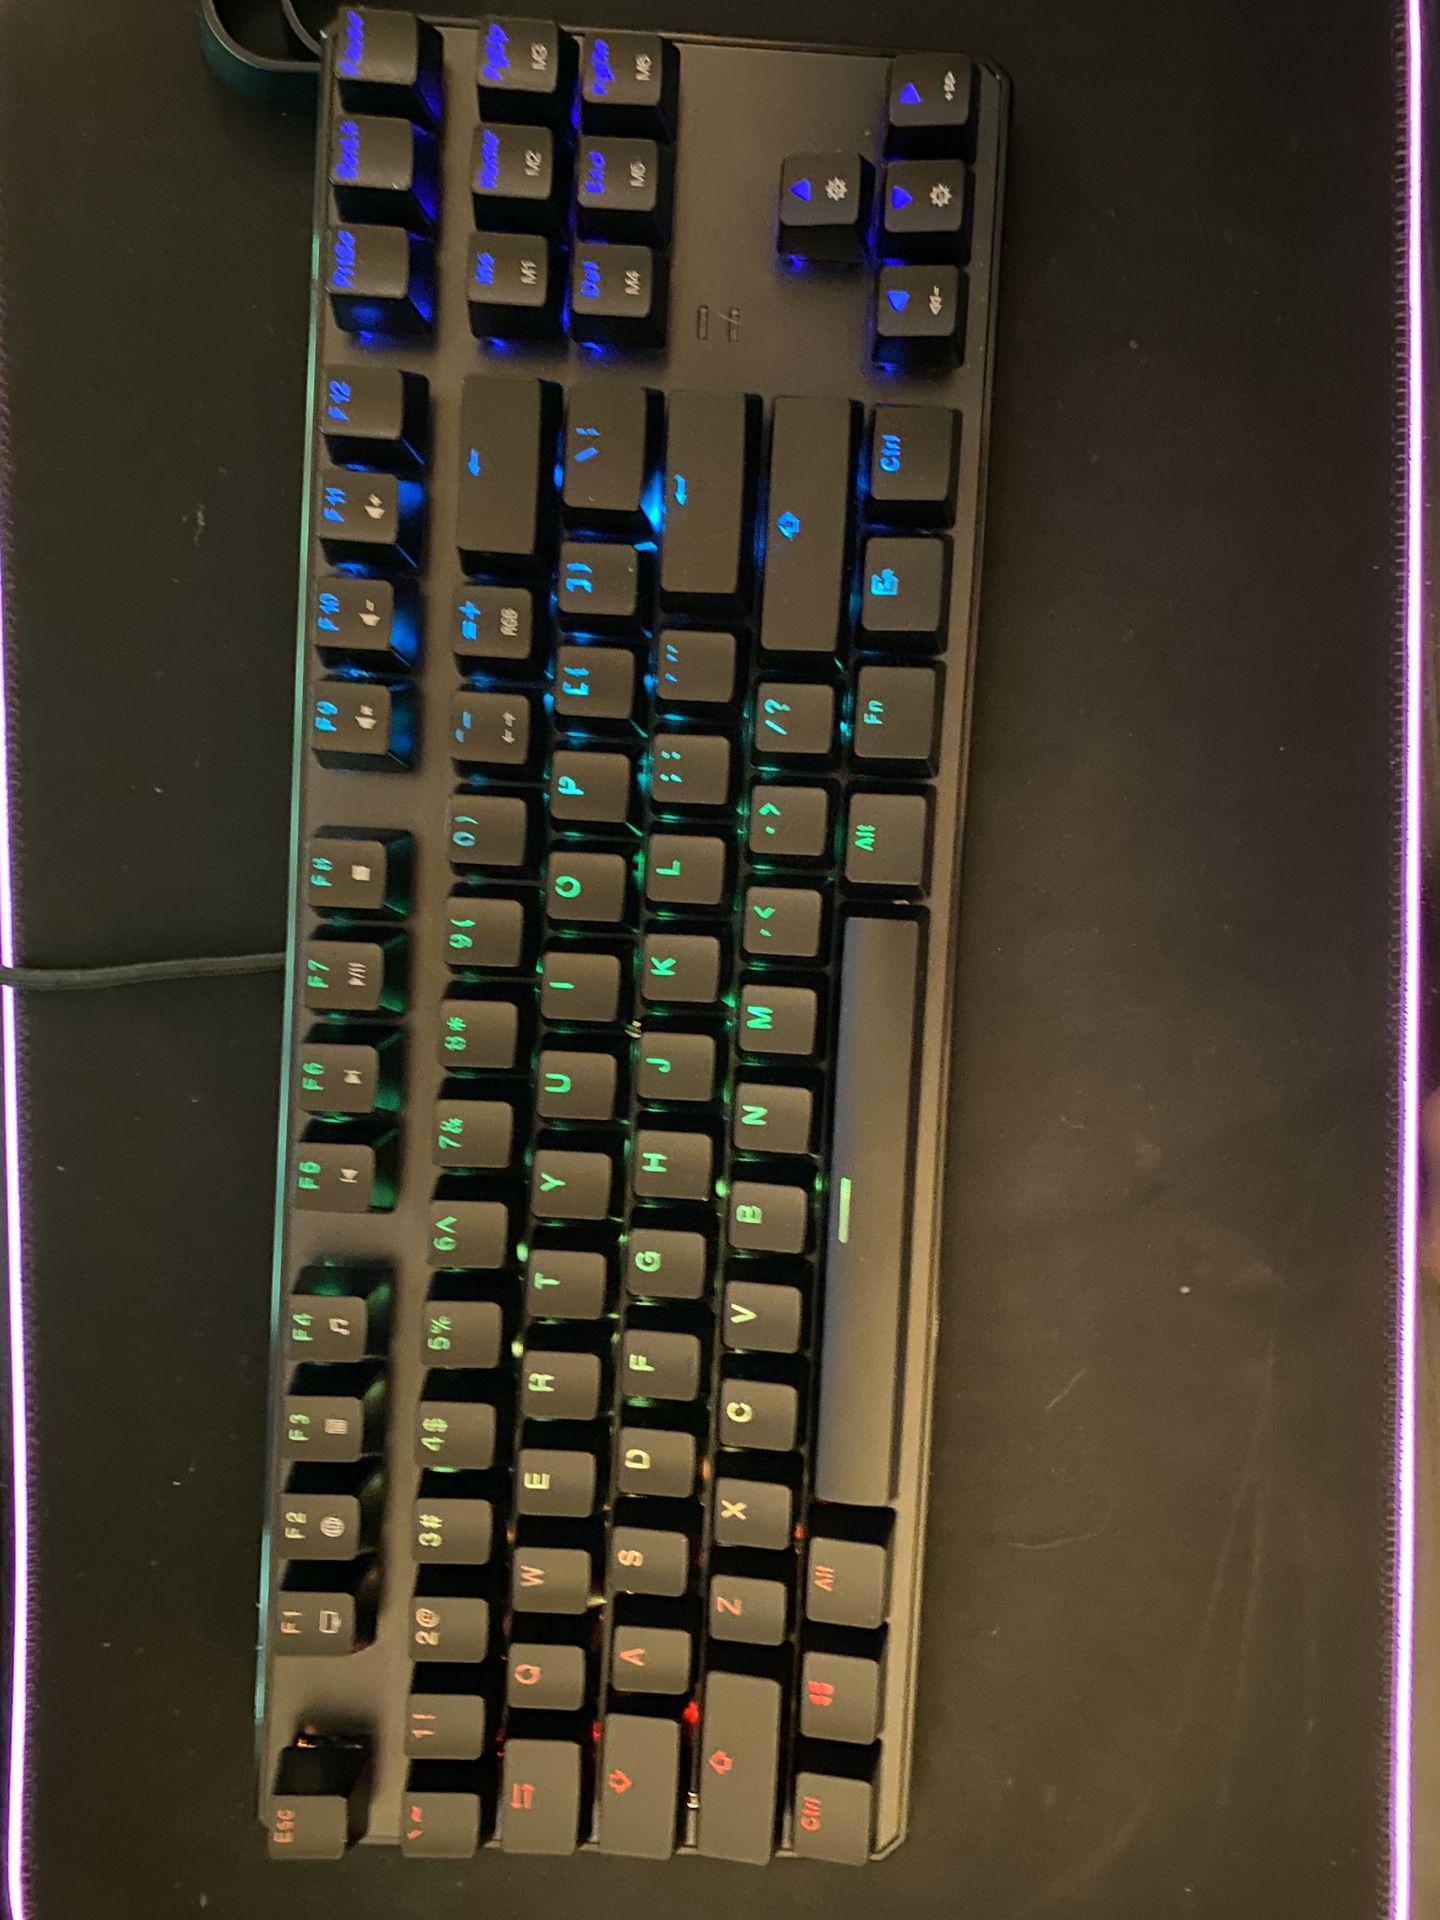 87 Mechanical gaming Keyboard ( BROWN KEYS)